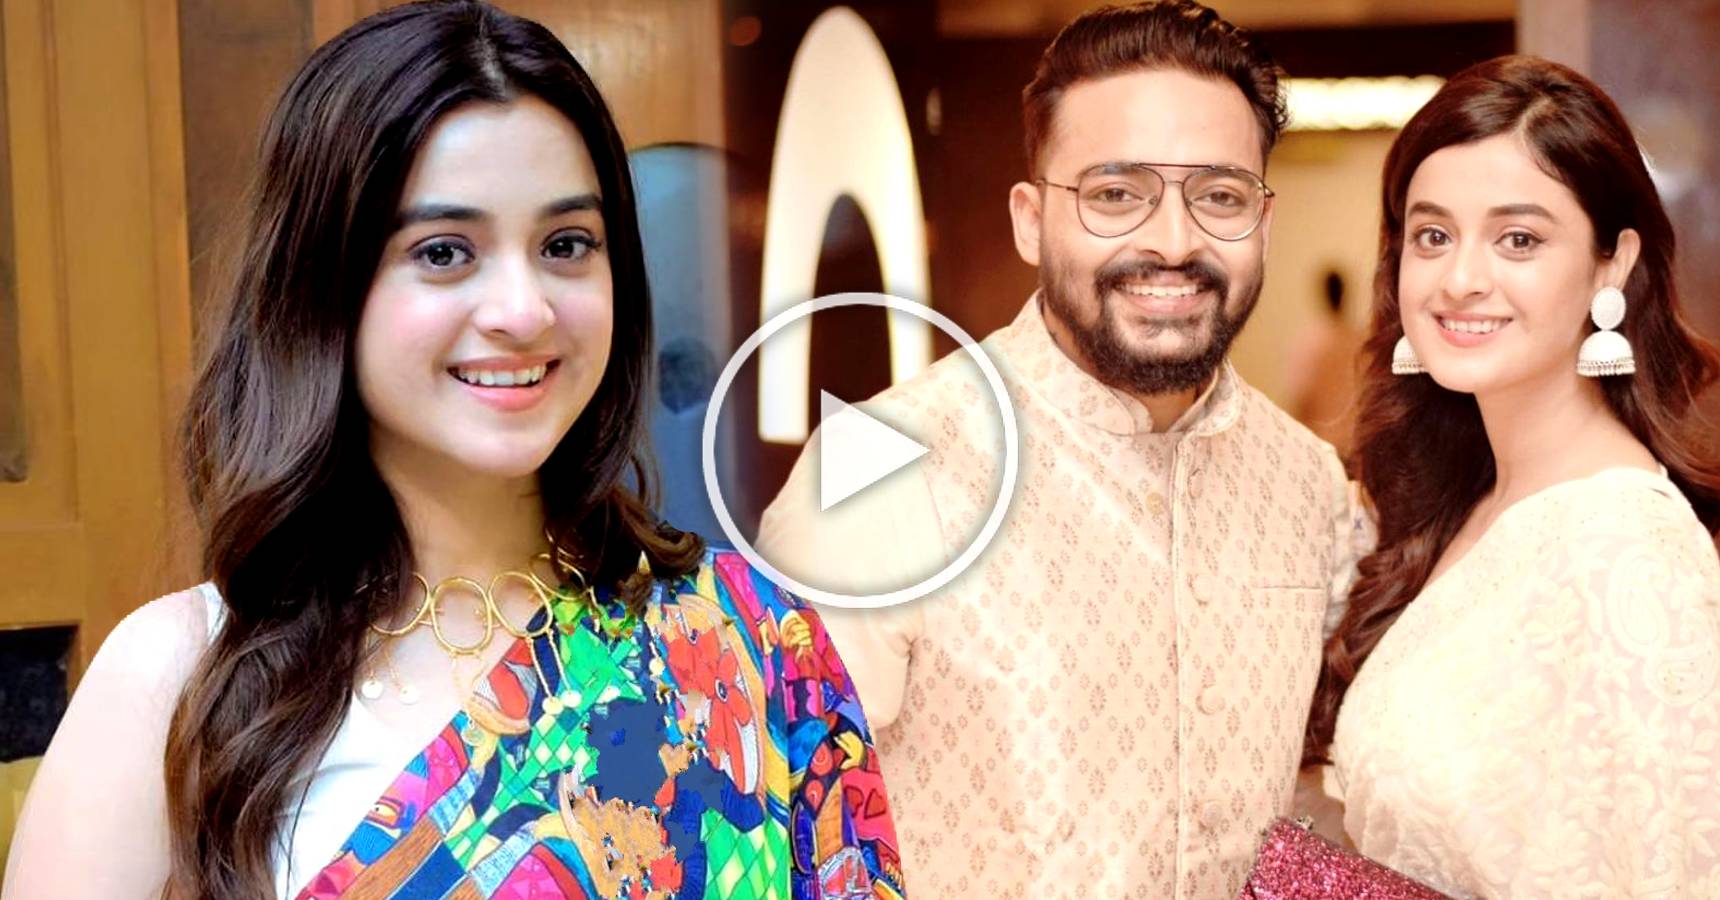 Darshana Banik Aiburobhaat video goes viral before marriage with Saurav Das